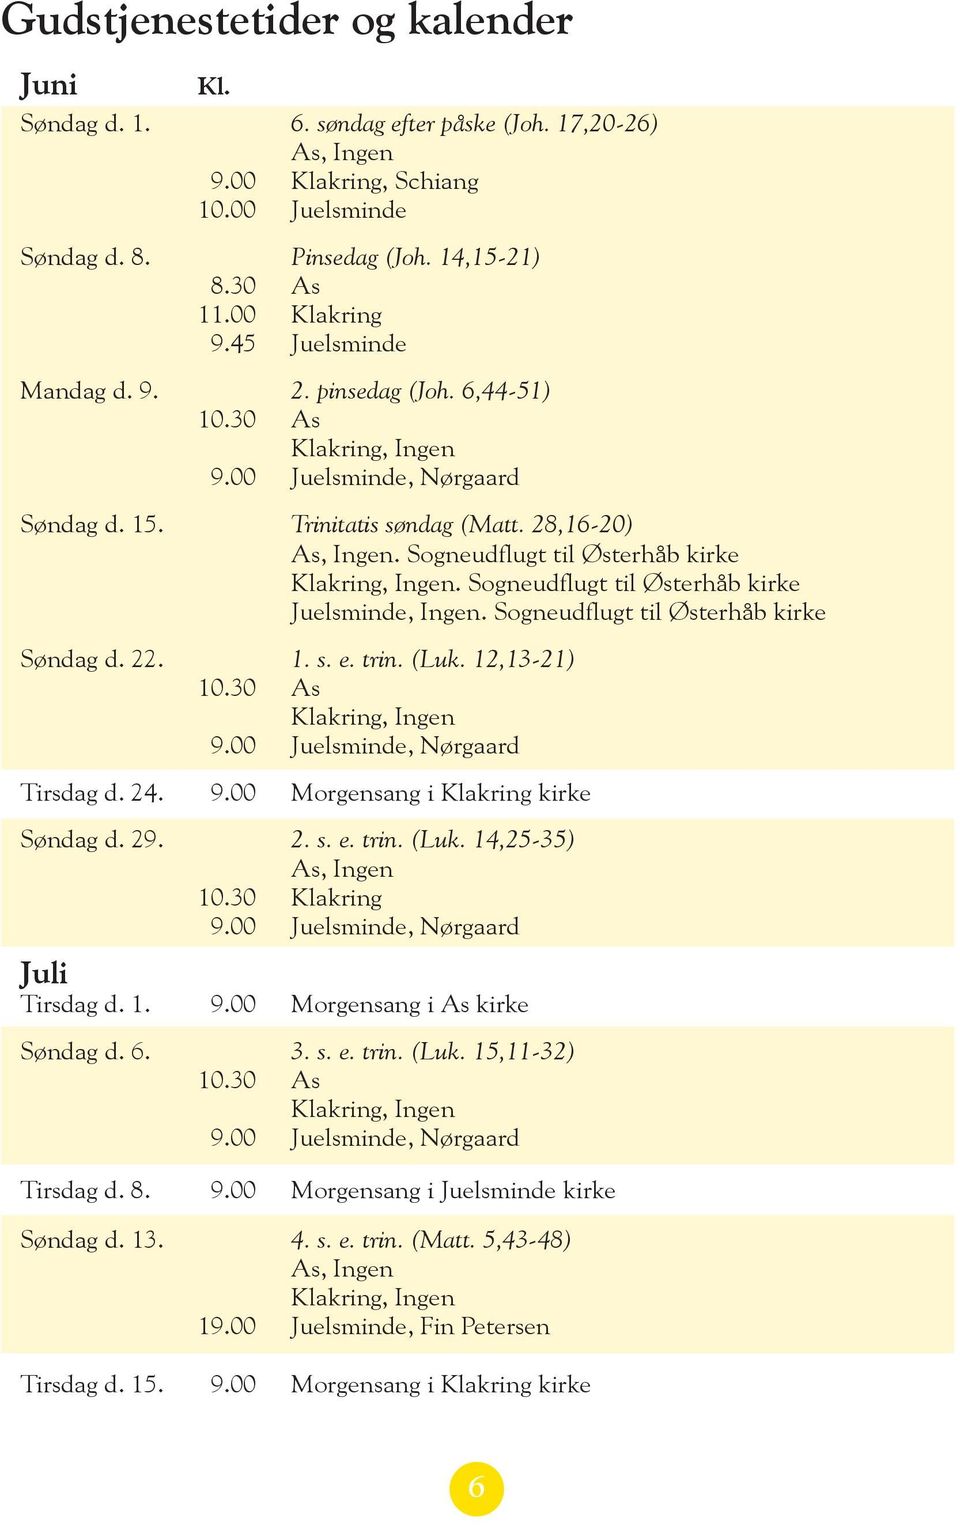 Sogneudflugt til Østerhåb kirke Søndag d. 22. 1. s. e. trin. (Luk. 12,13-21) 10.30 As Tirsdag d. 24. 9.00 Morgensang i Klakring kirke Søndag d. 29. 2. s. e. trin. (Luk. 14,25-35) 10.